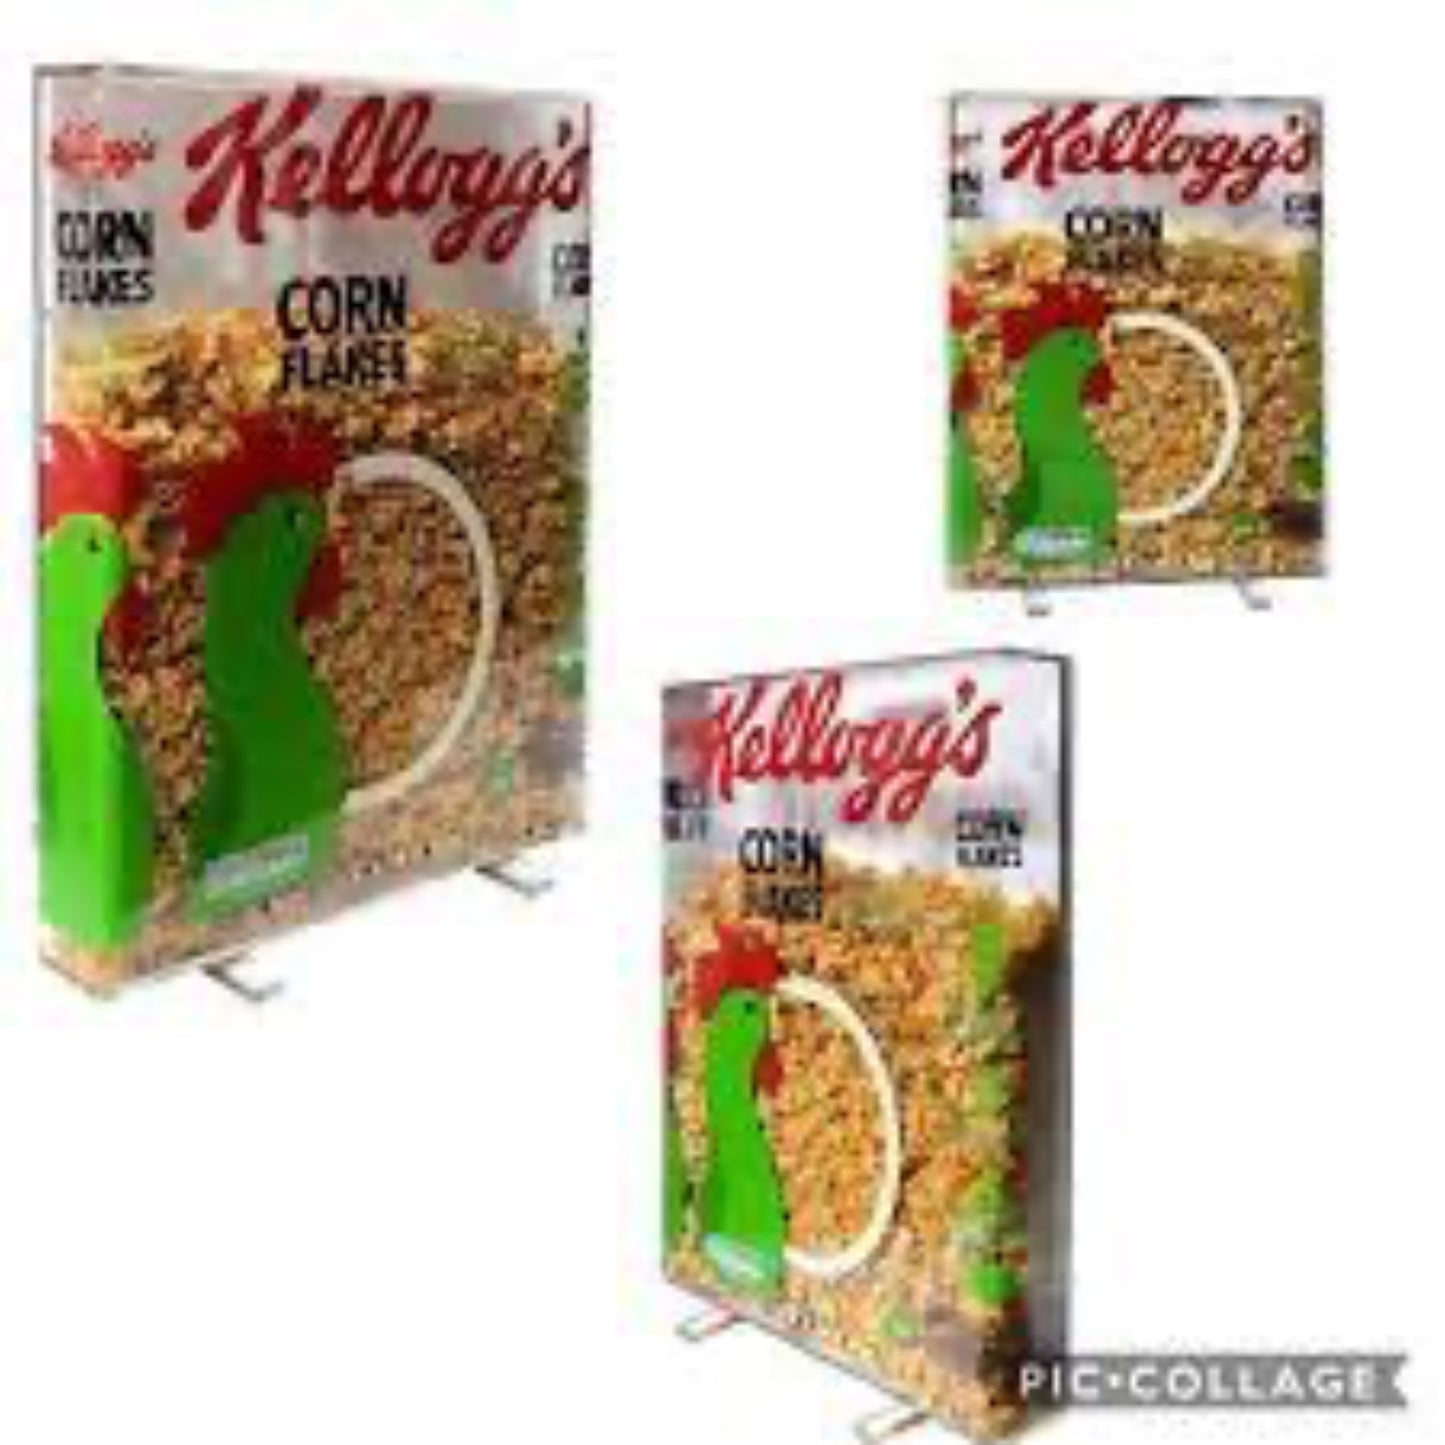 ANNICK C - Kellogg’s Corn Flakes Tribute (Tall format)